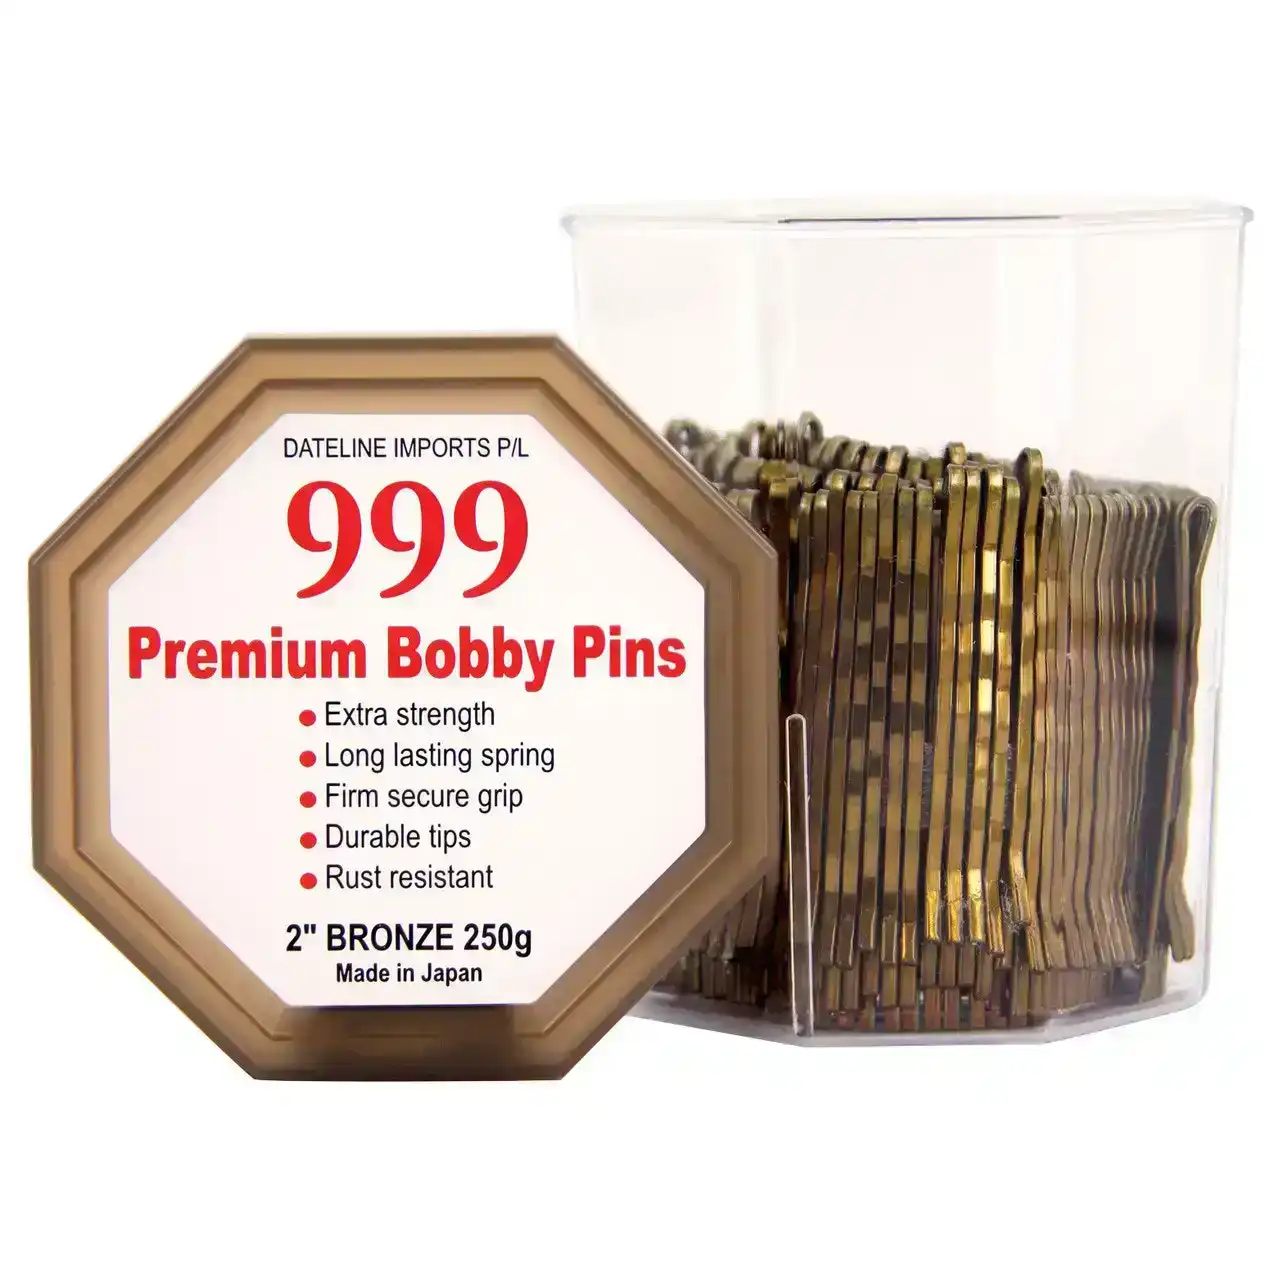 Black Bobby Pins - 50 Pk